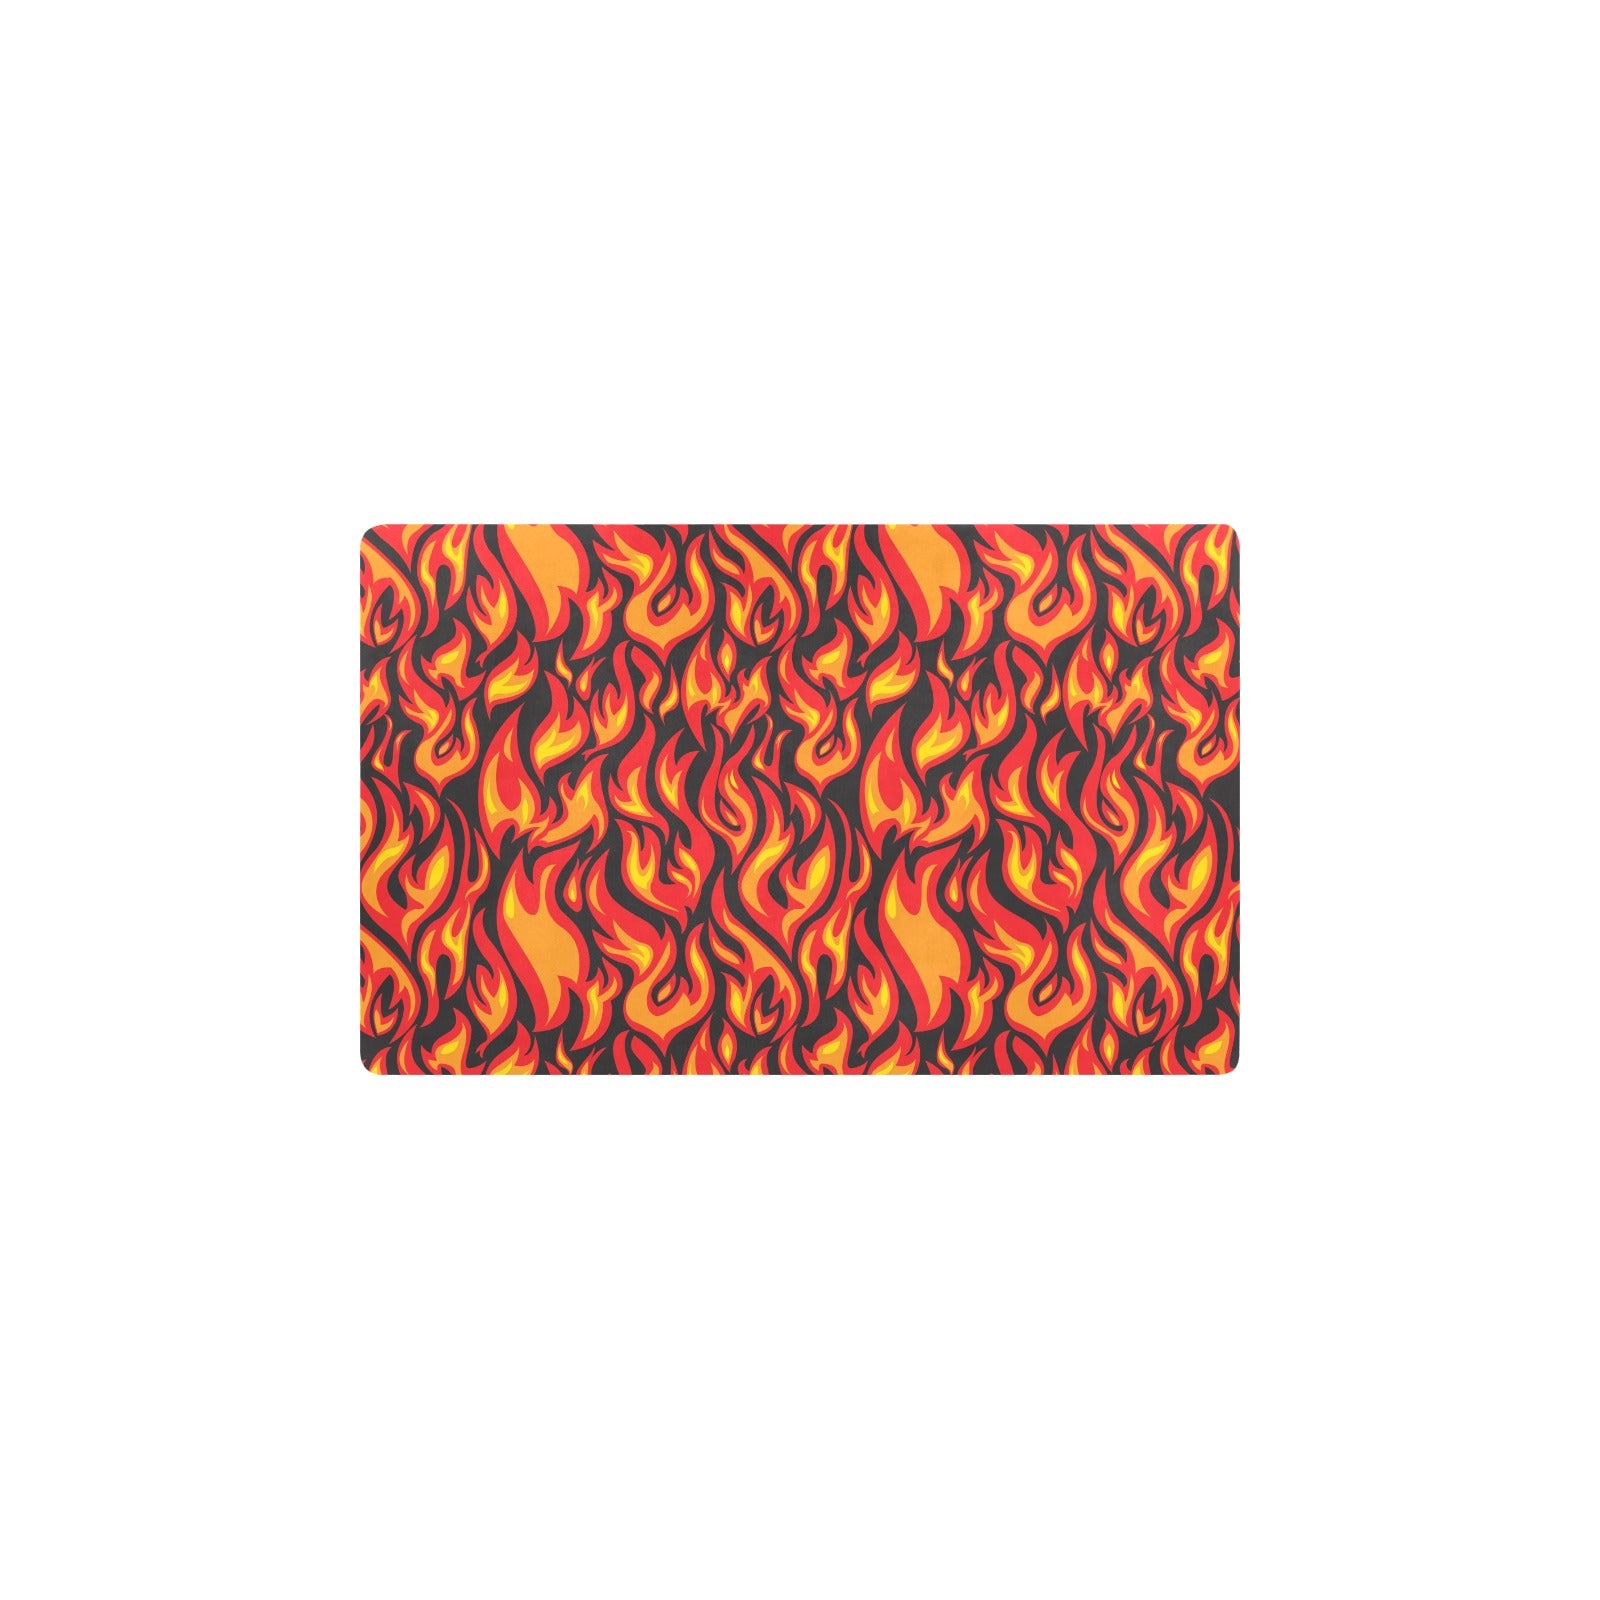 Flame Fire Print Pattern Kitchen Mat